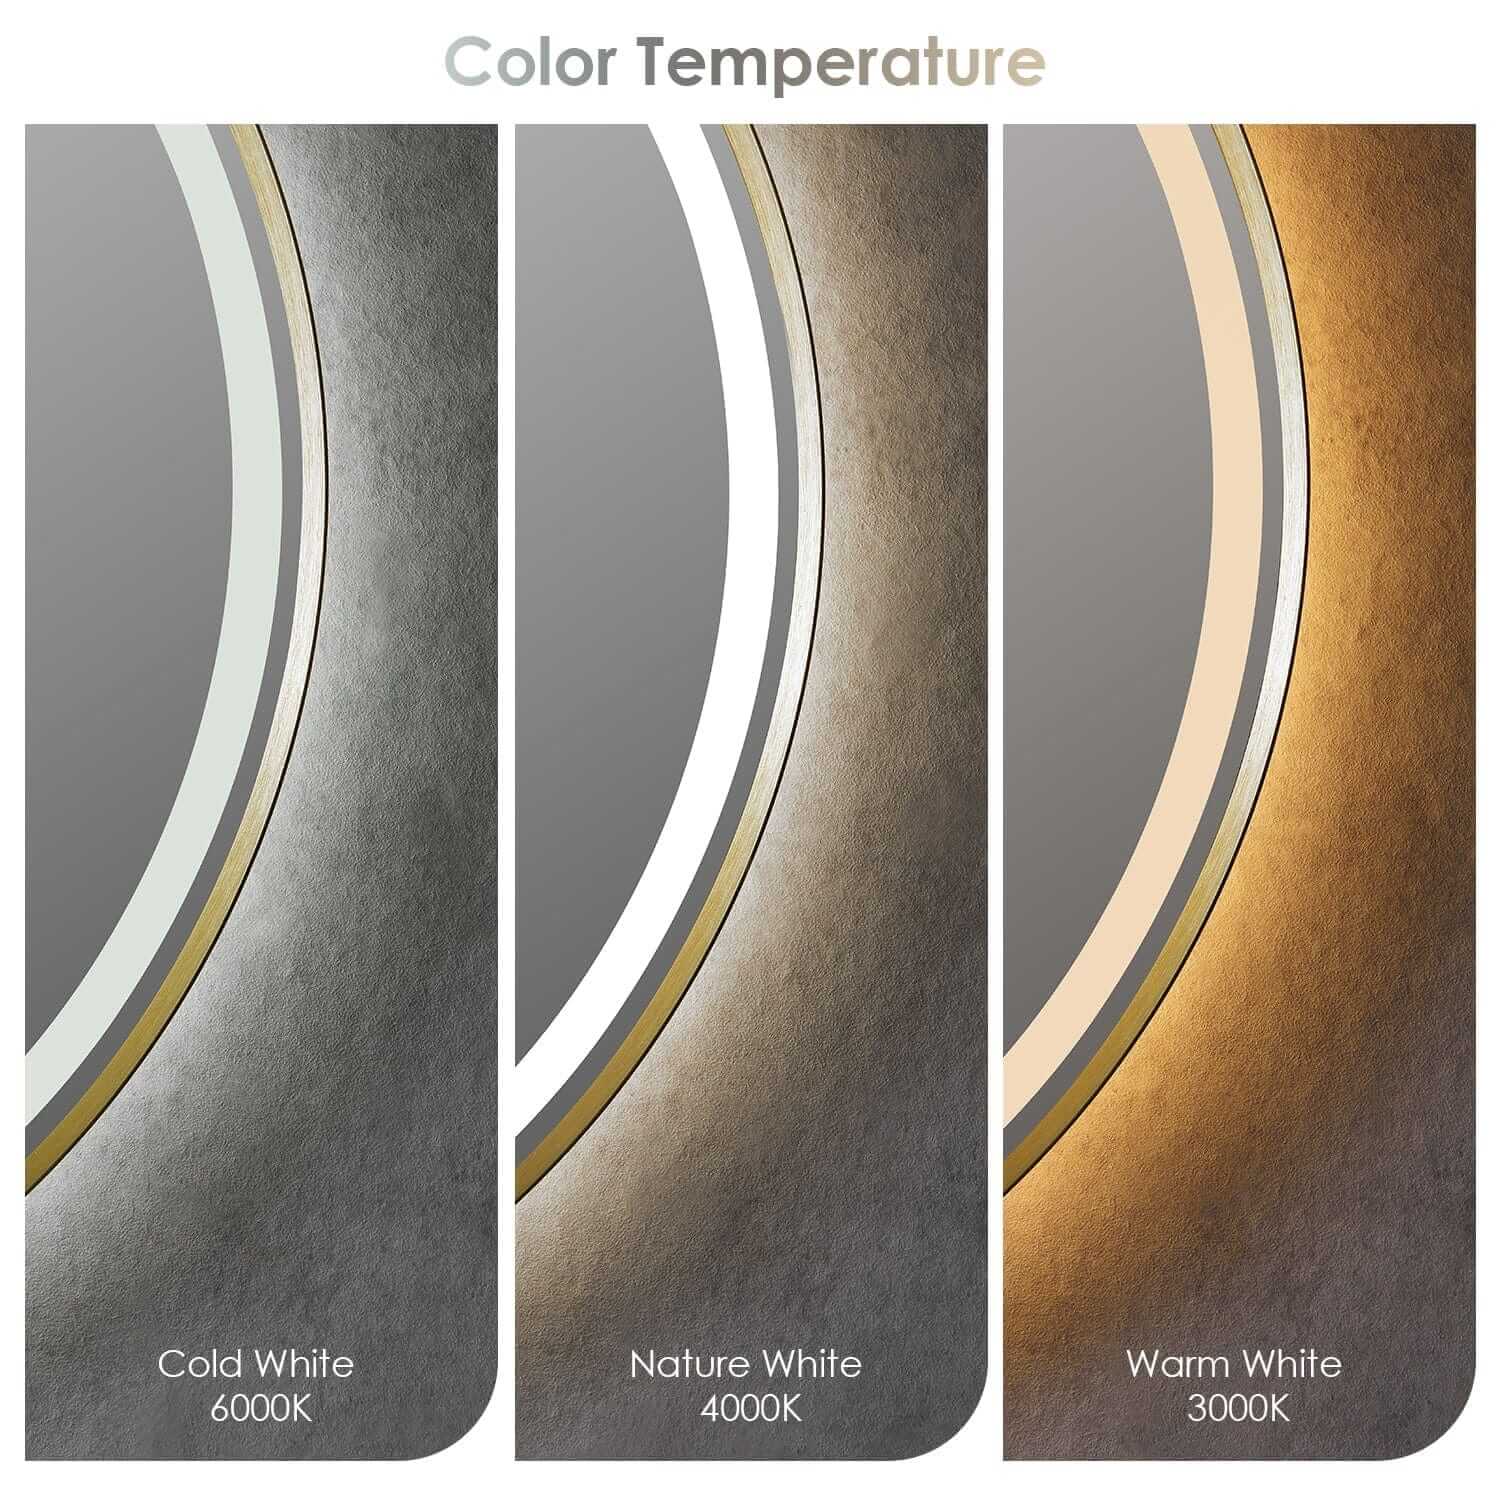 Lighted Bathroom Mirror - Altair Color Temperature Pic